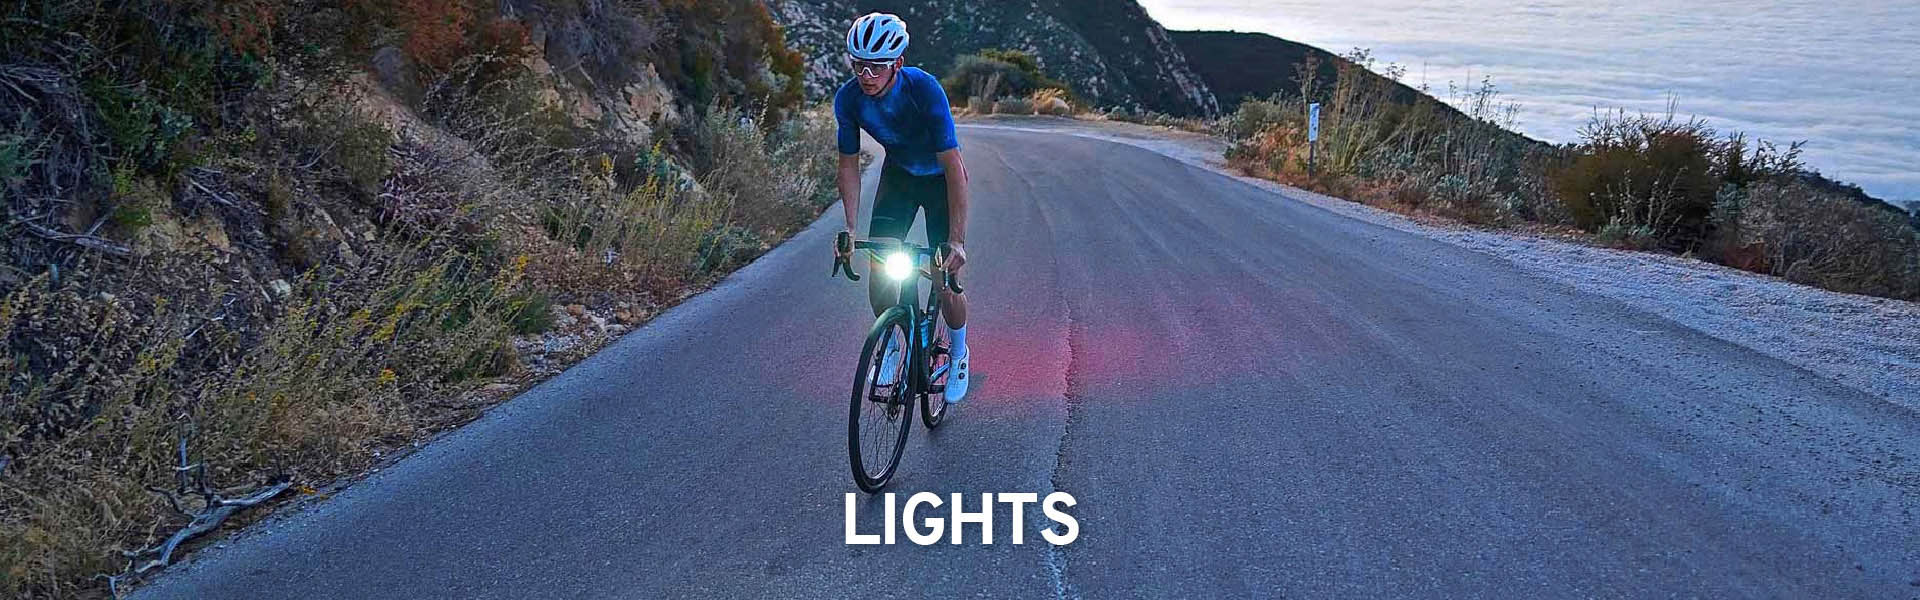 Giant Lights At Beyond The Bike